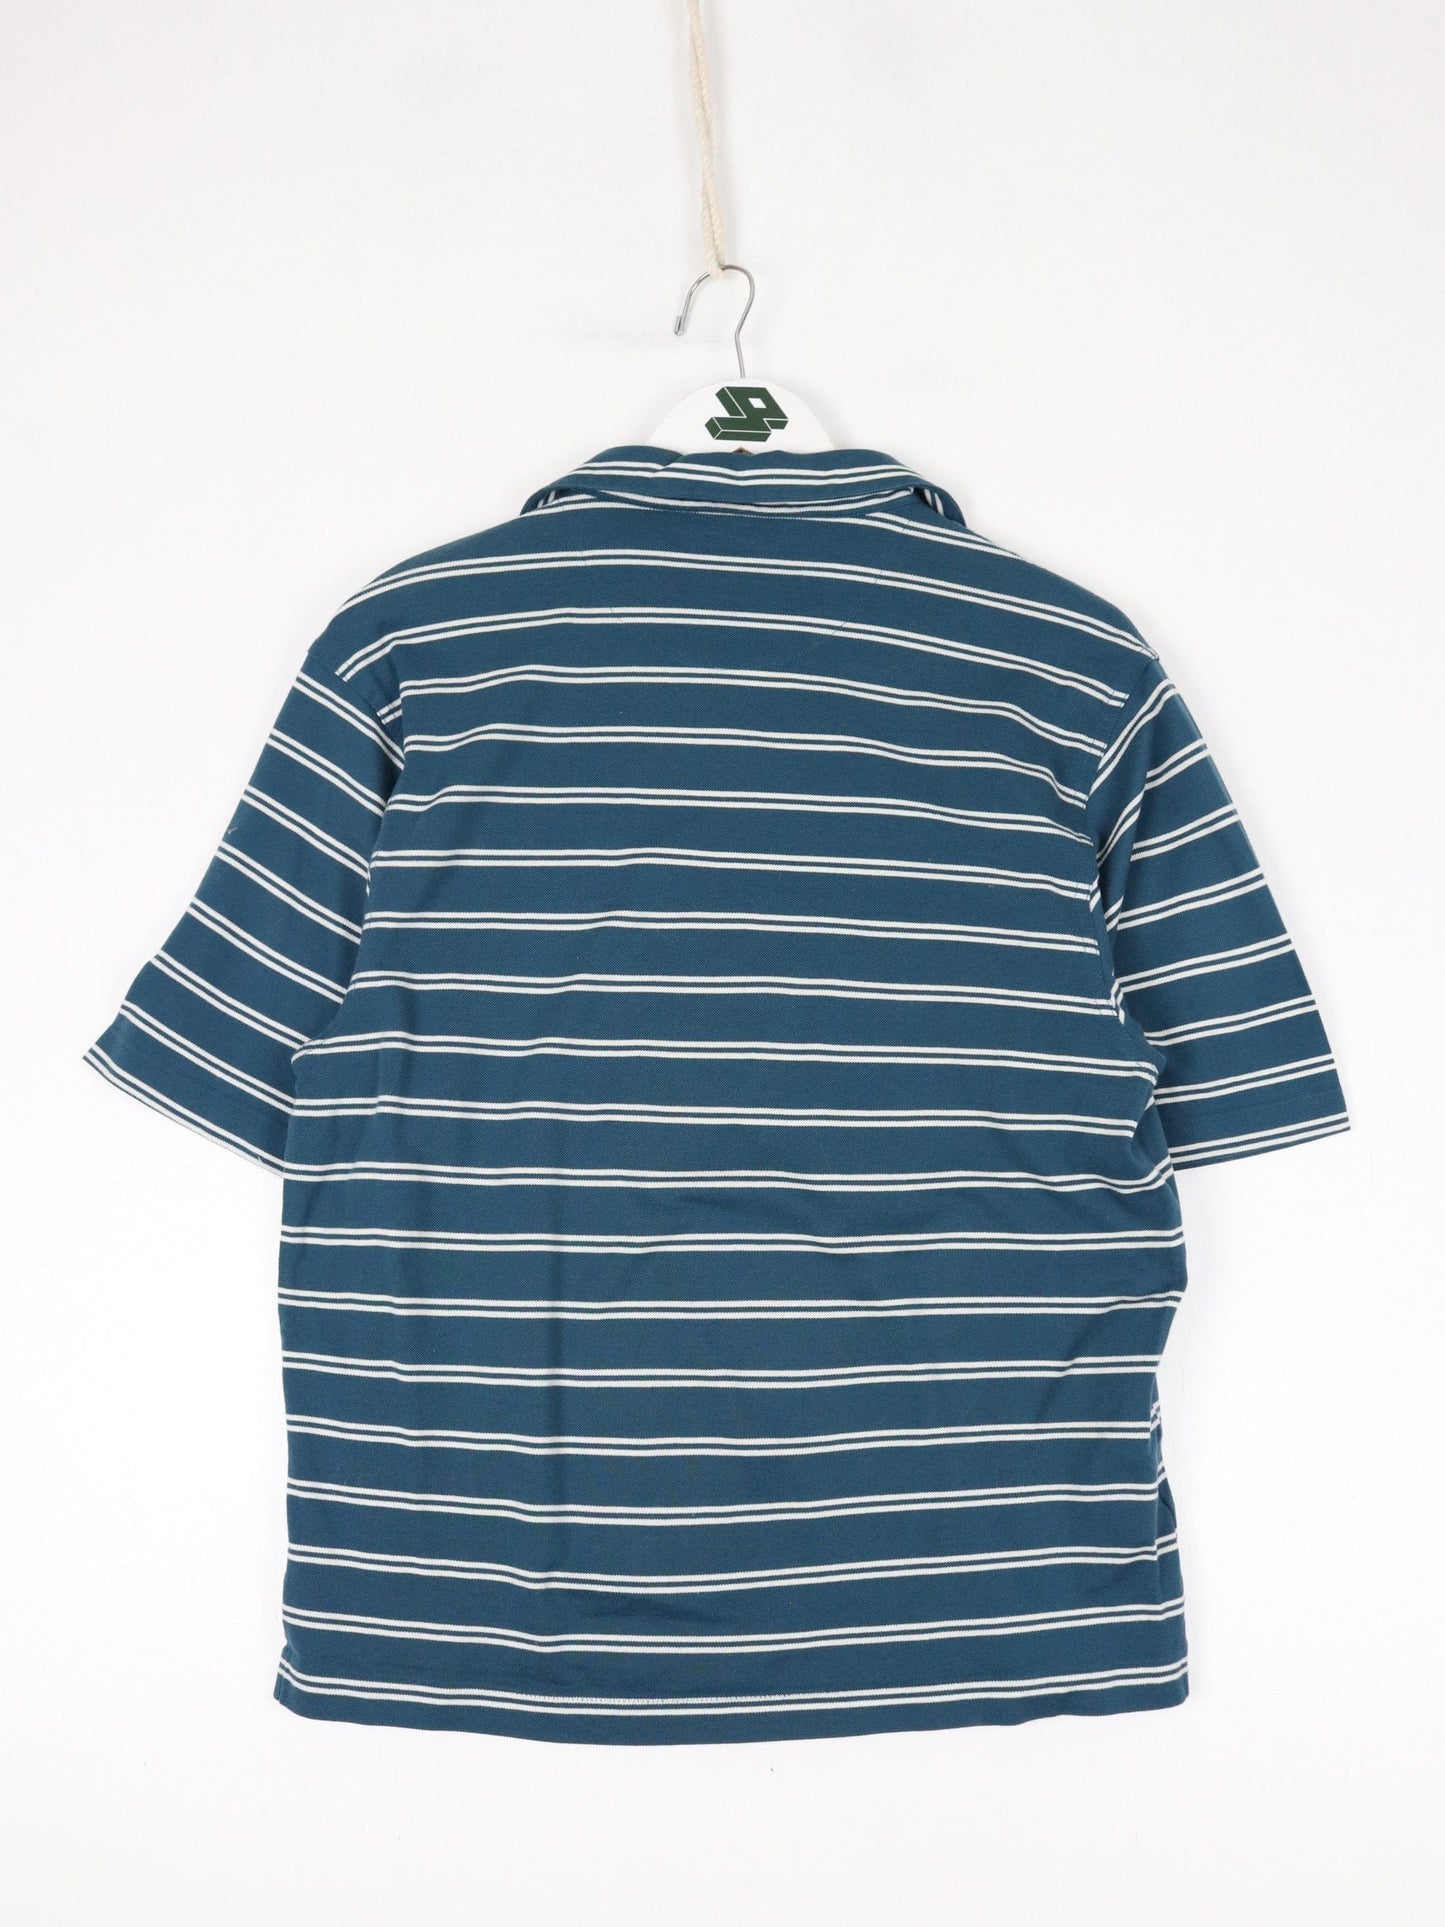 Nike Button Up Shirts Nike Golf Polo Shirt Mens Small Blue Striped